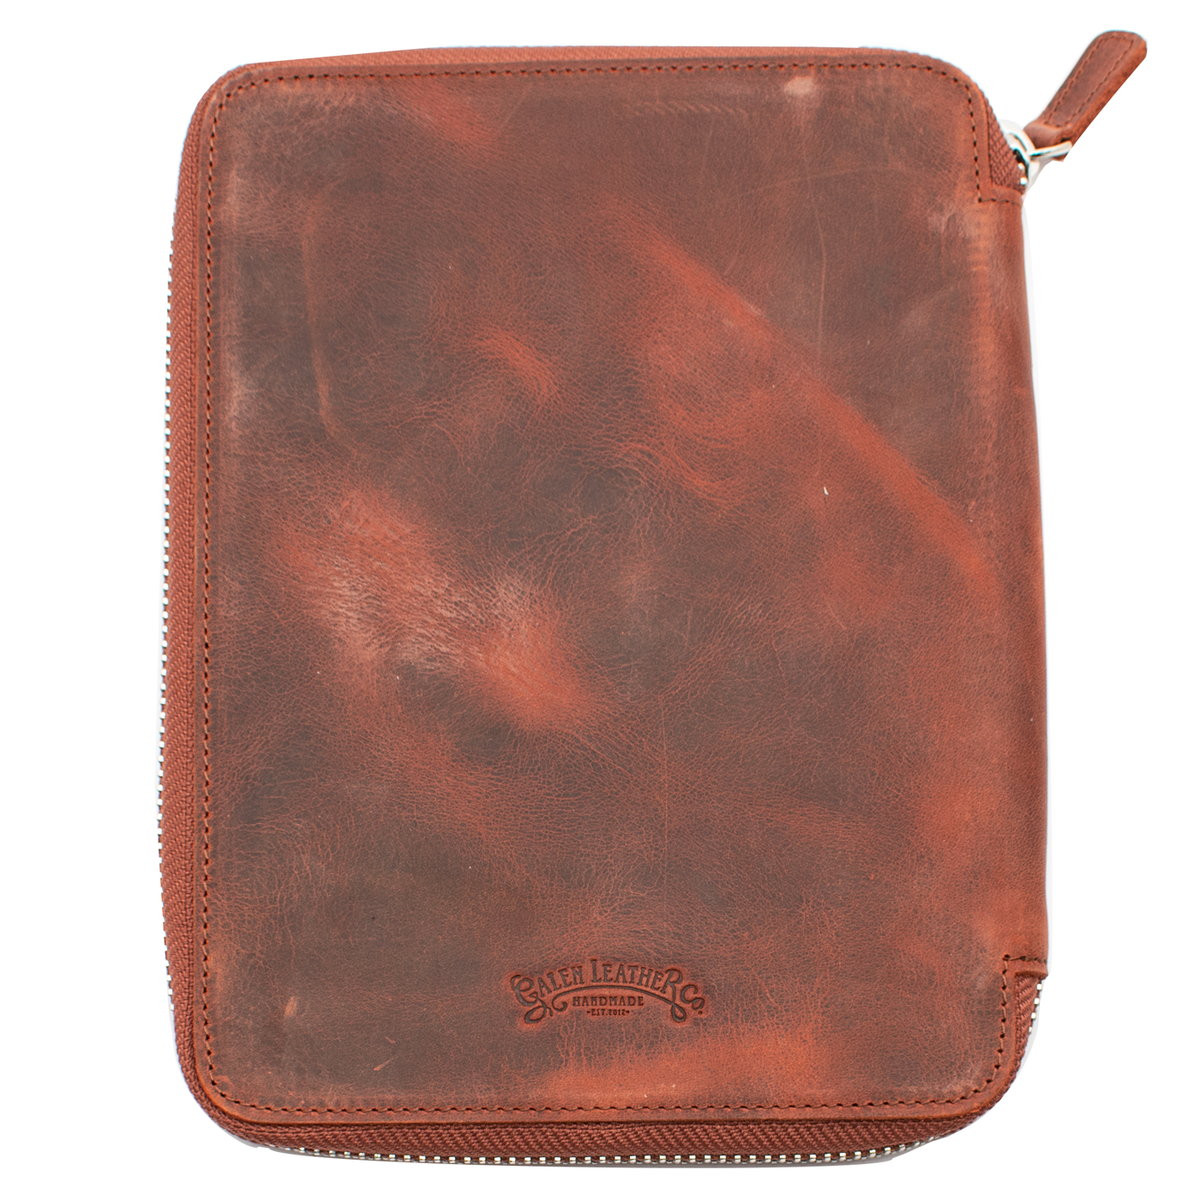 Galen Leather Co. Zippered A5 Notebook Folio- Crazy Horse Orange